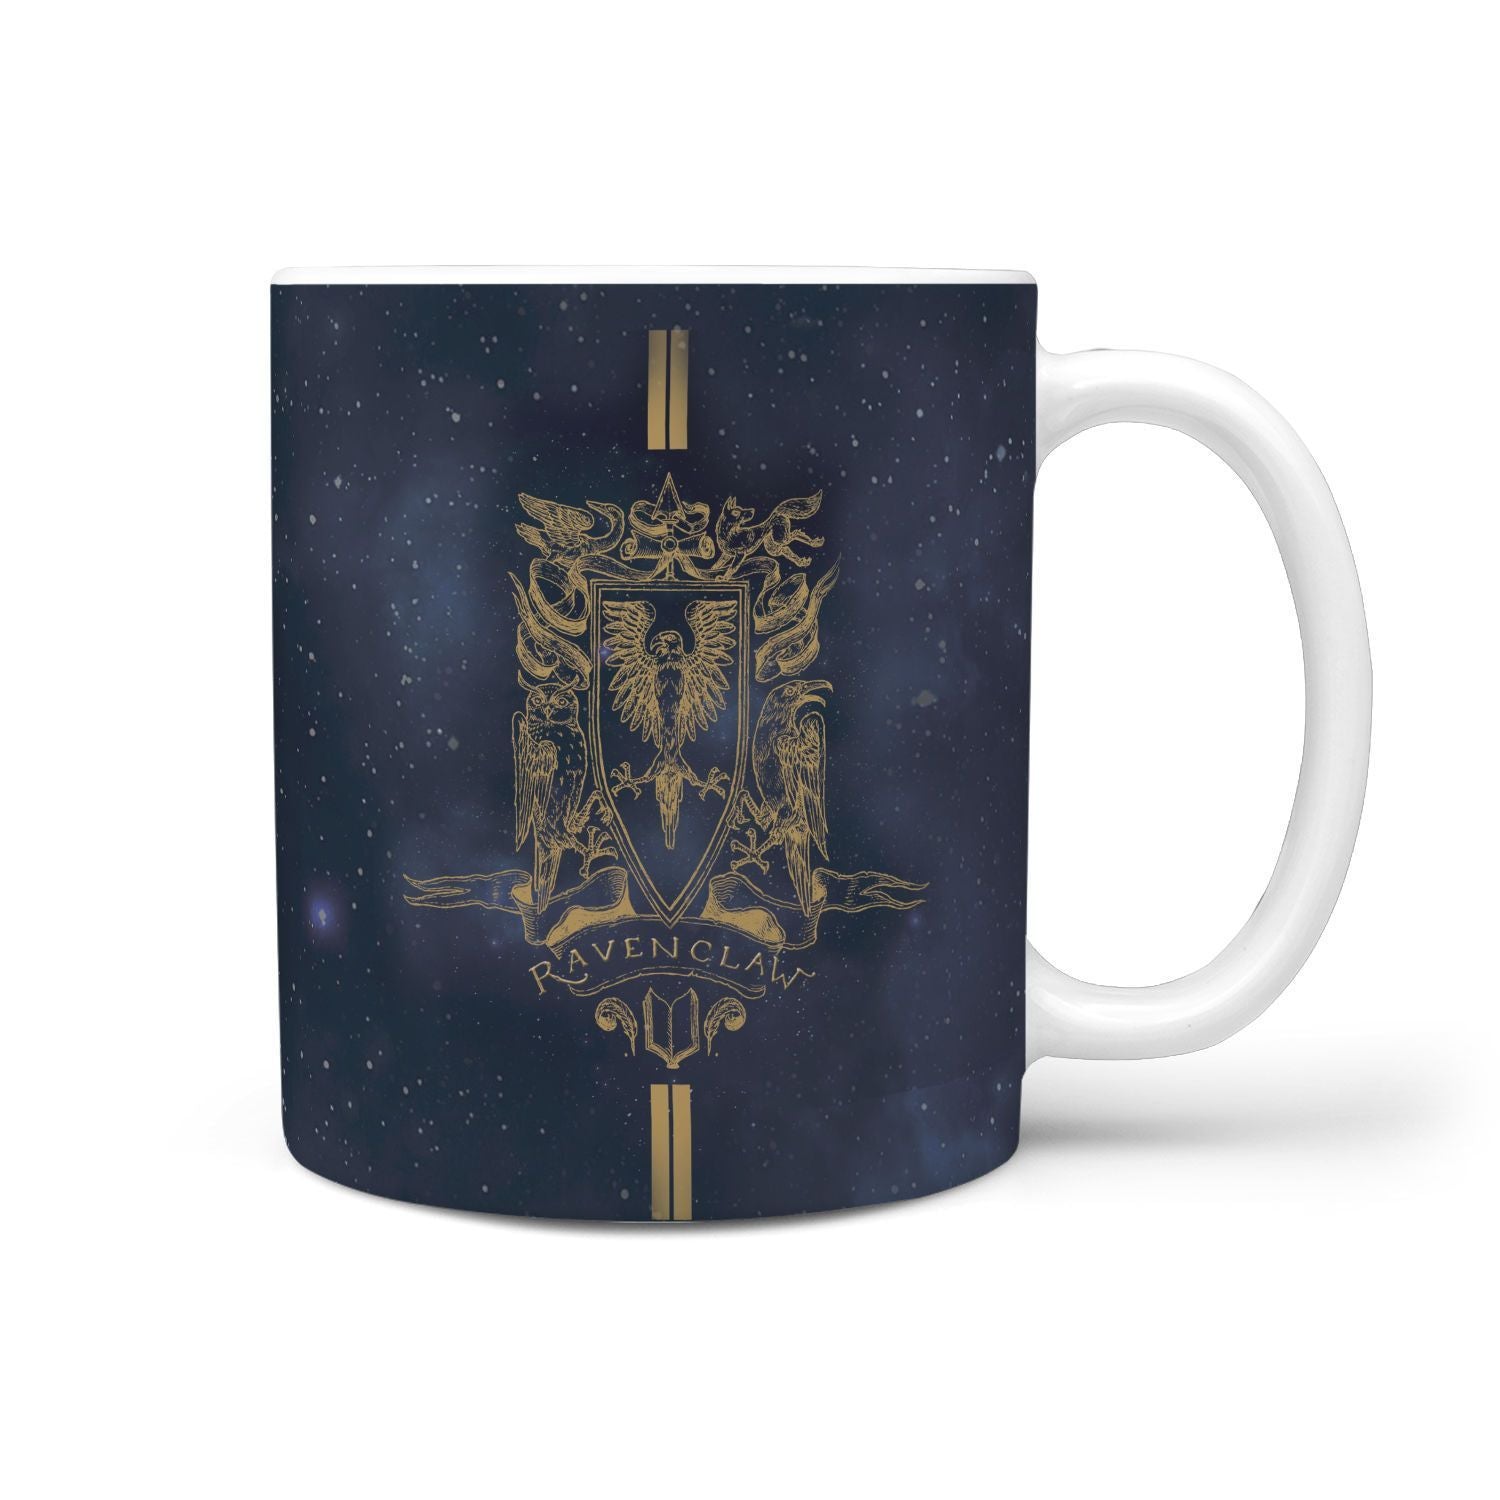 Ravenclaw Edition Harry Potter Mug